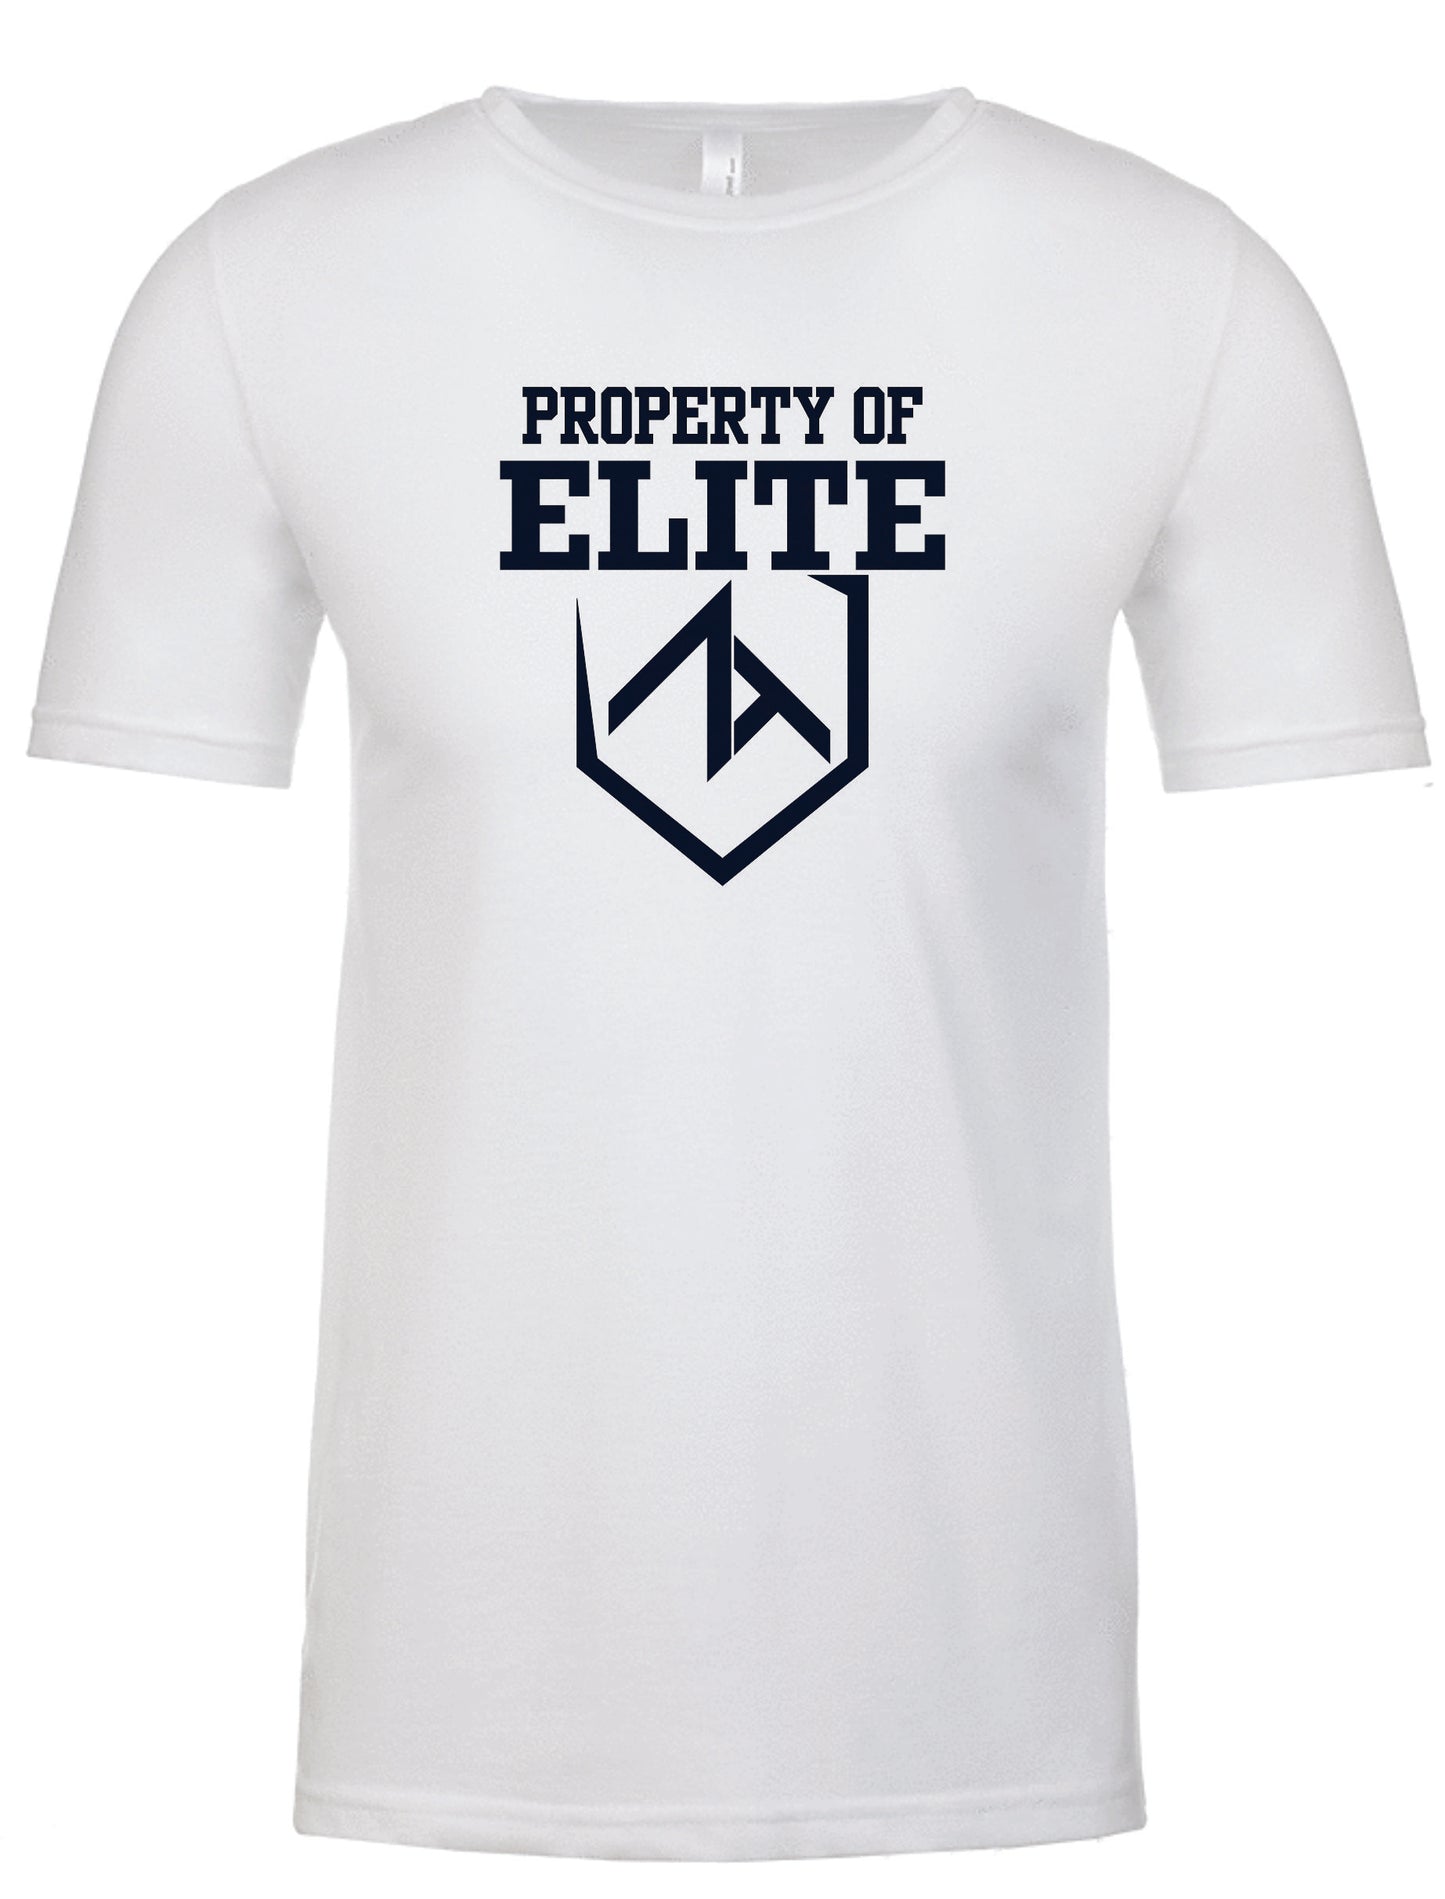 Short sleeve "Property of Elite" Cotton T-shirt